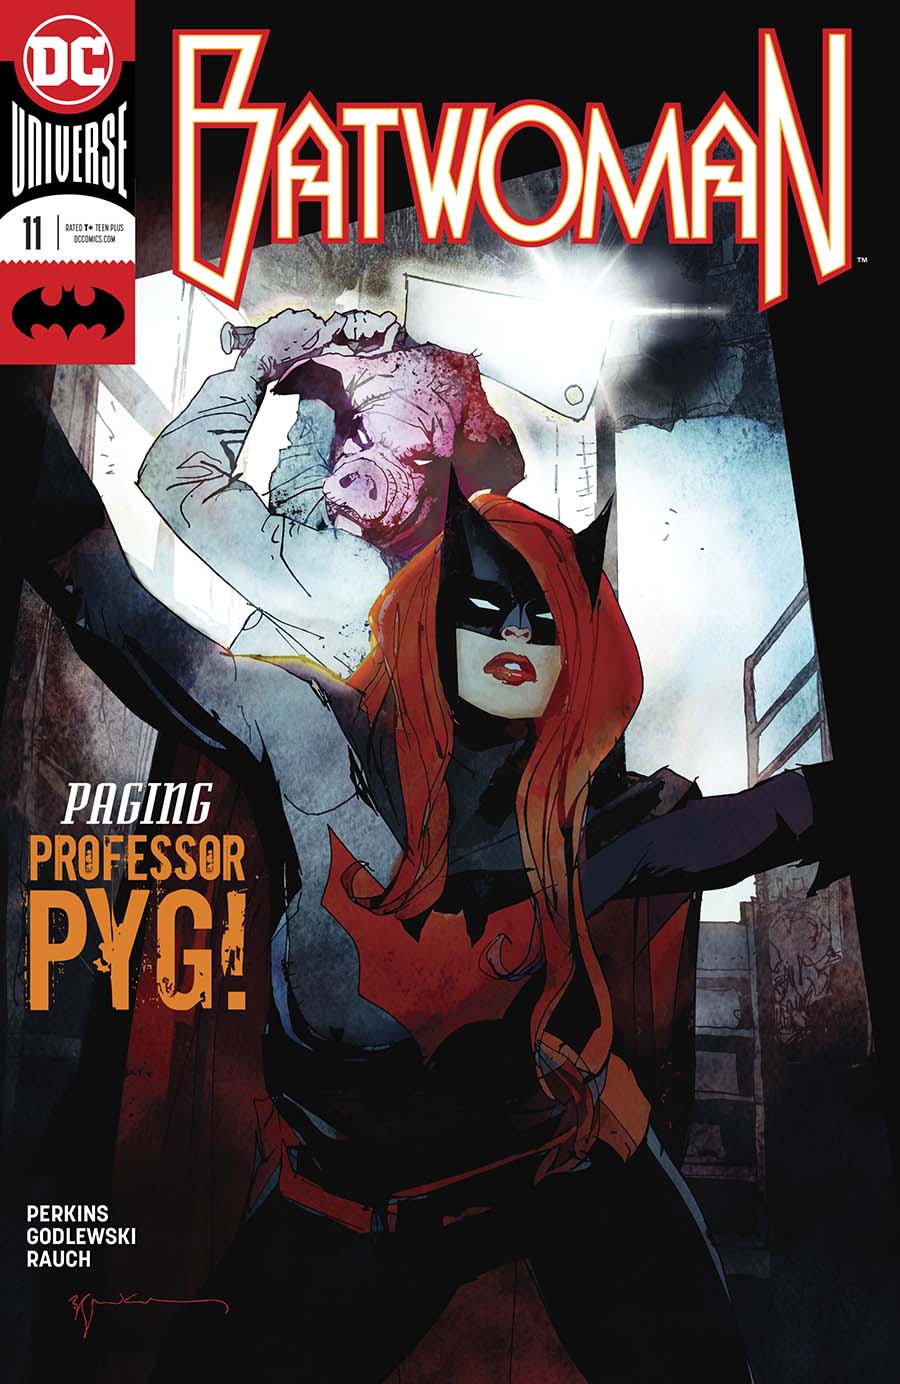 Batwoman Vol 2 #11 Cover A Regular Bill Sienkiewicz Cover